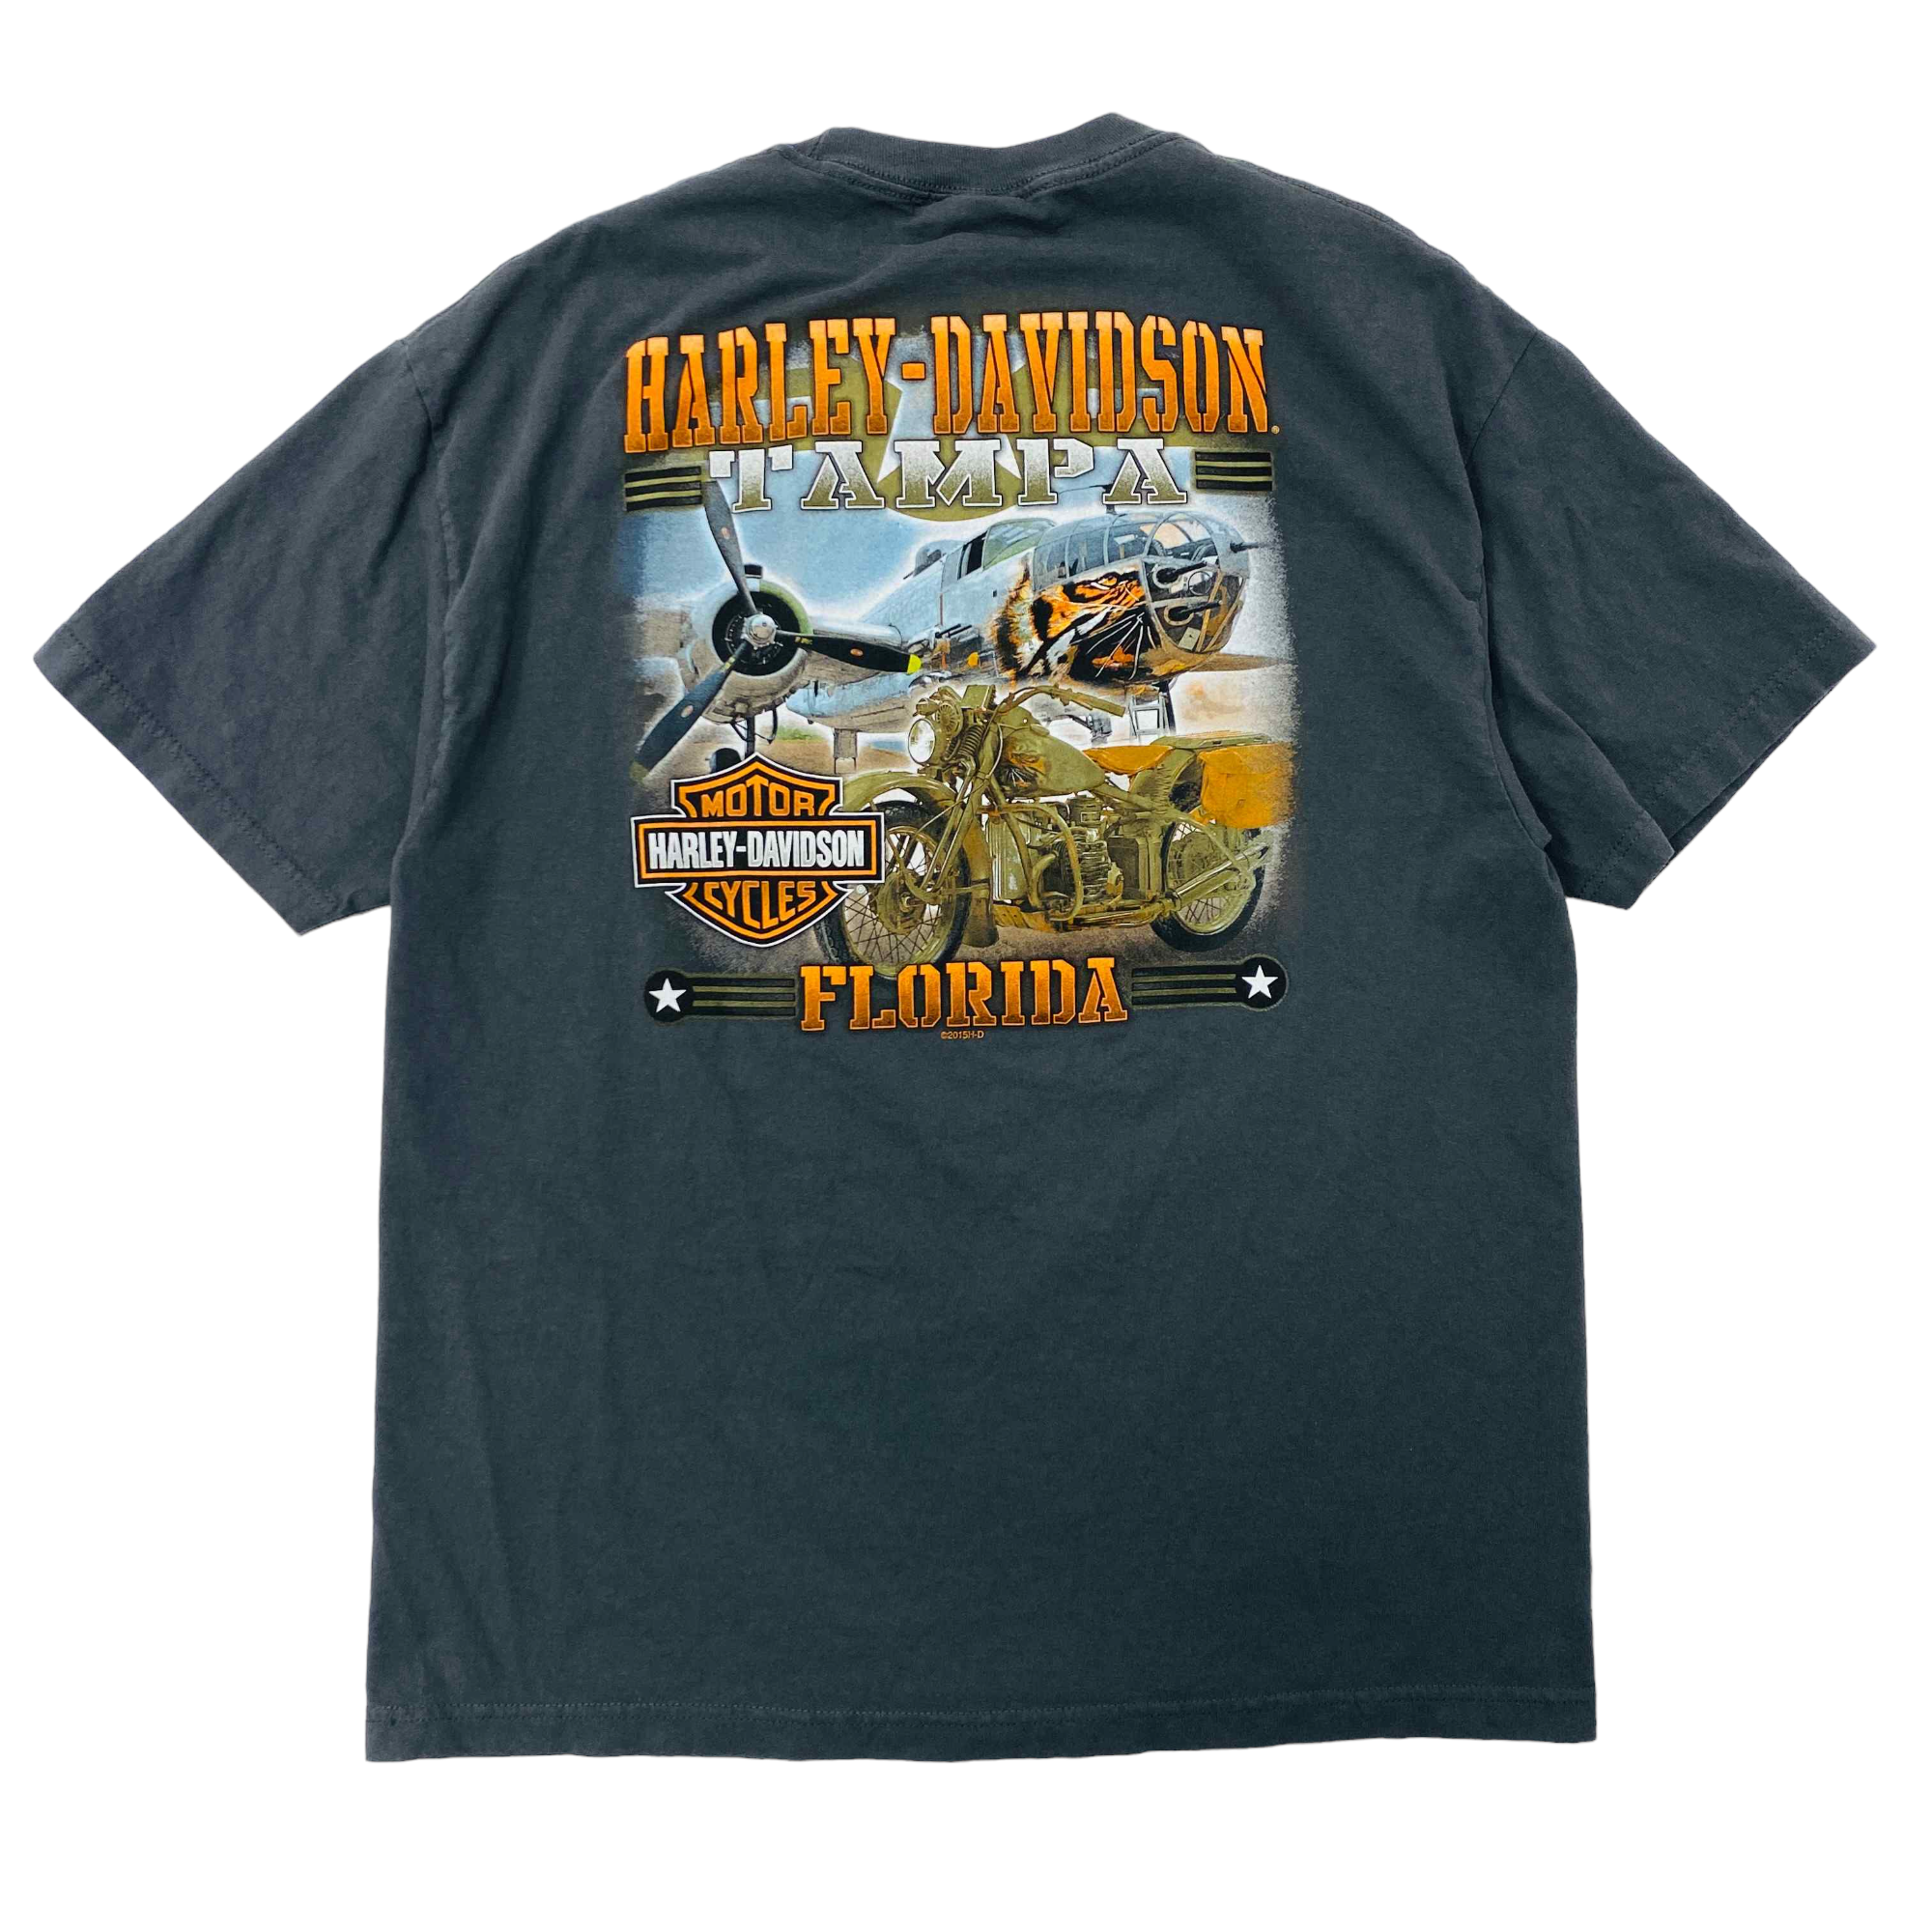 Harley Davidson Tampa Florida T-Shirt - XL